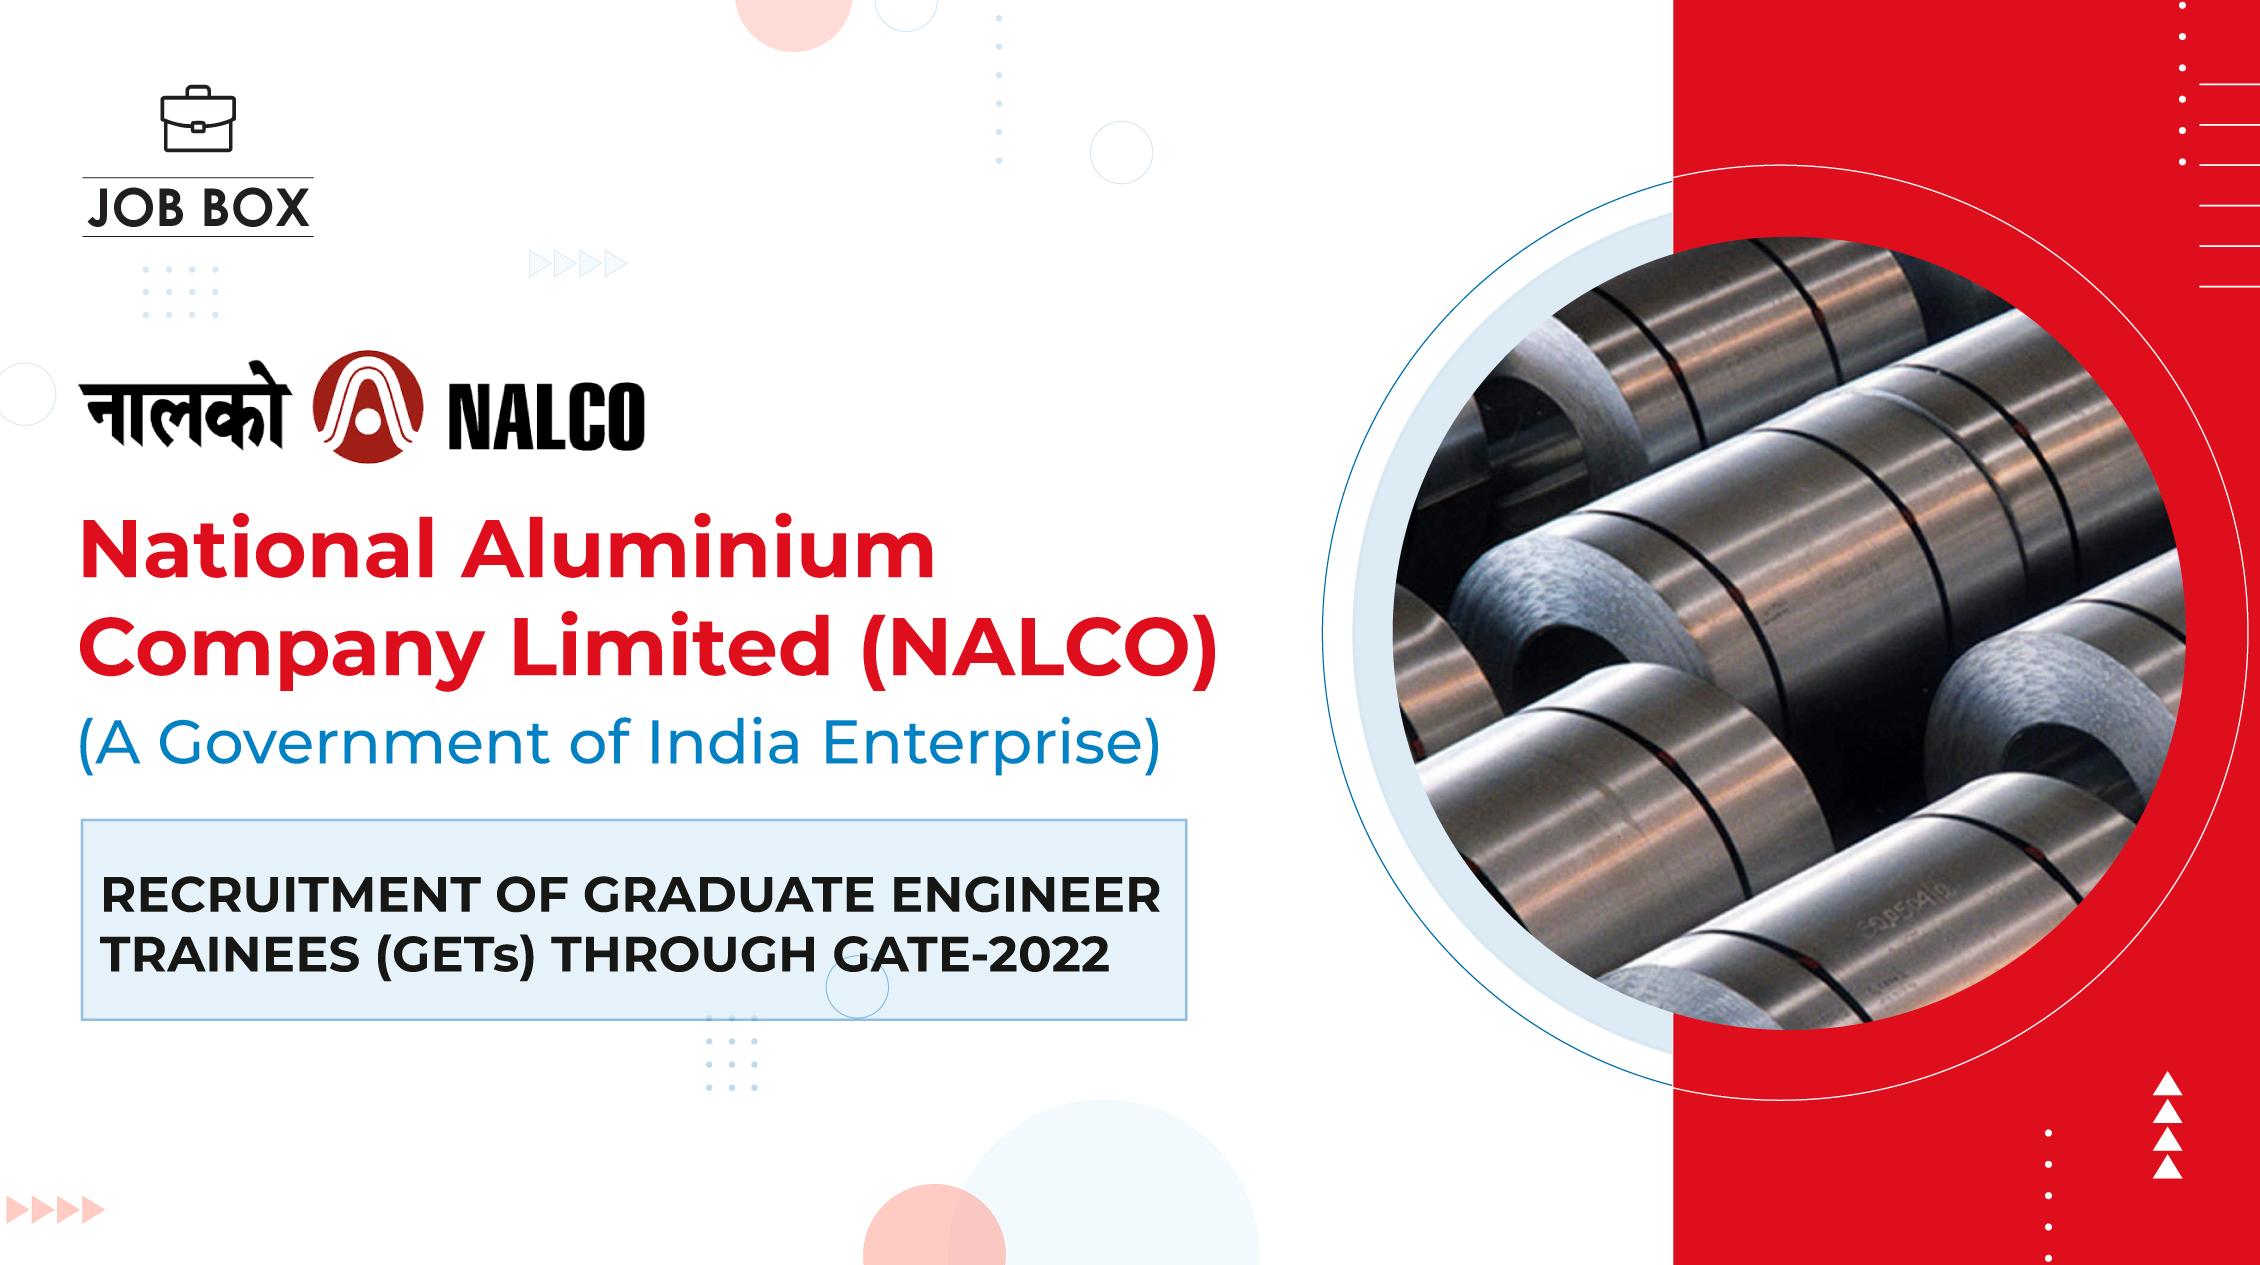 NALCO Recruitment through GATE 2022